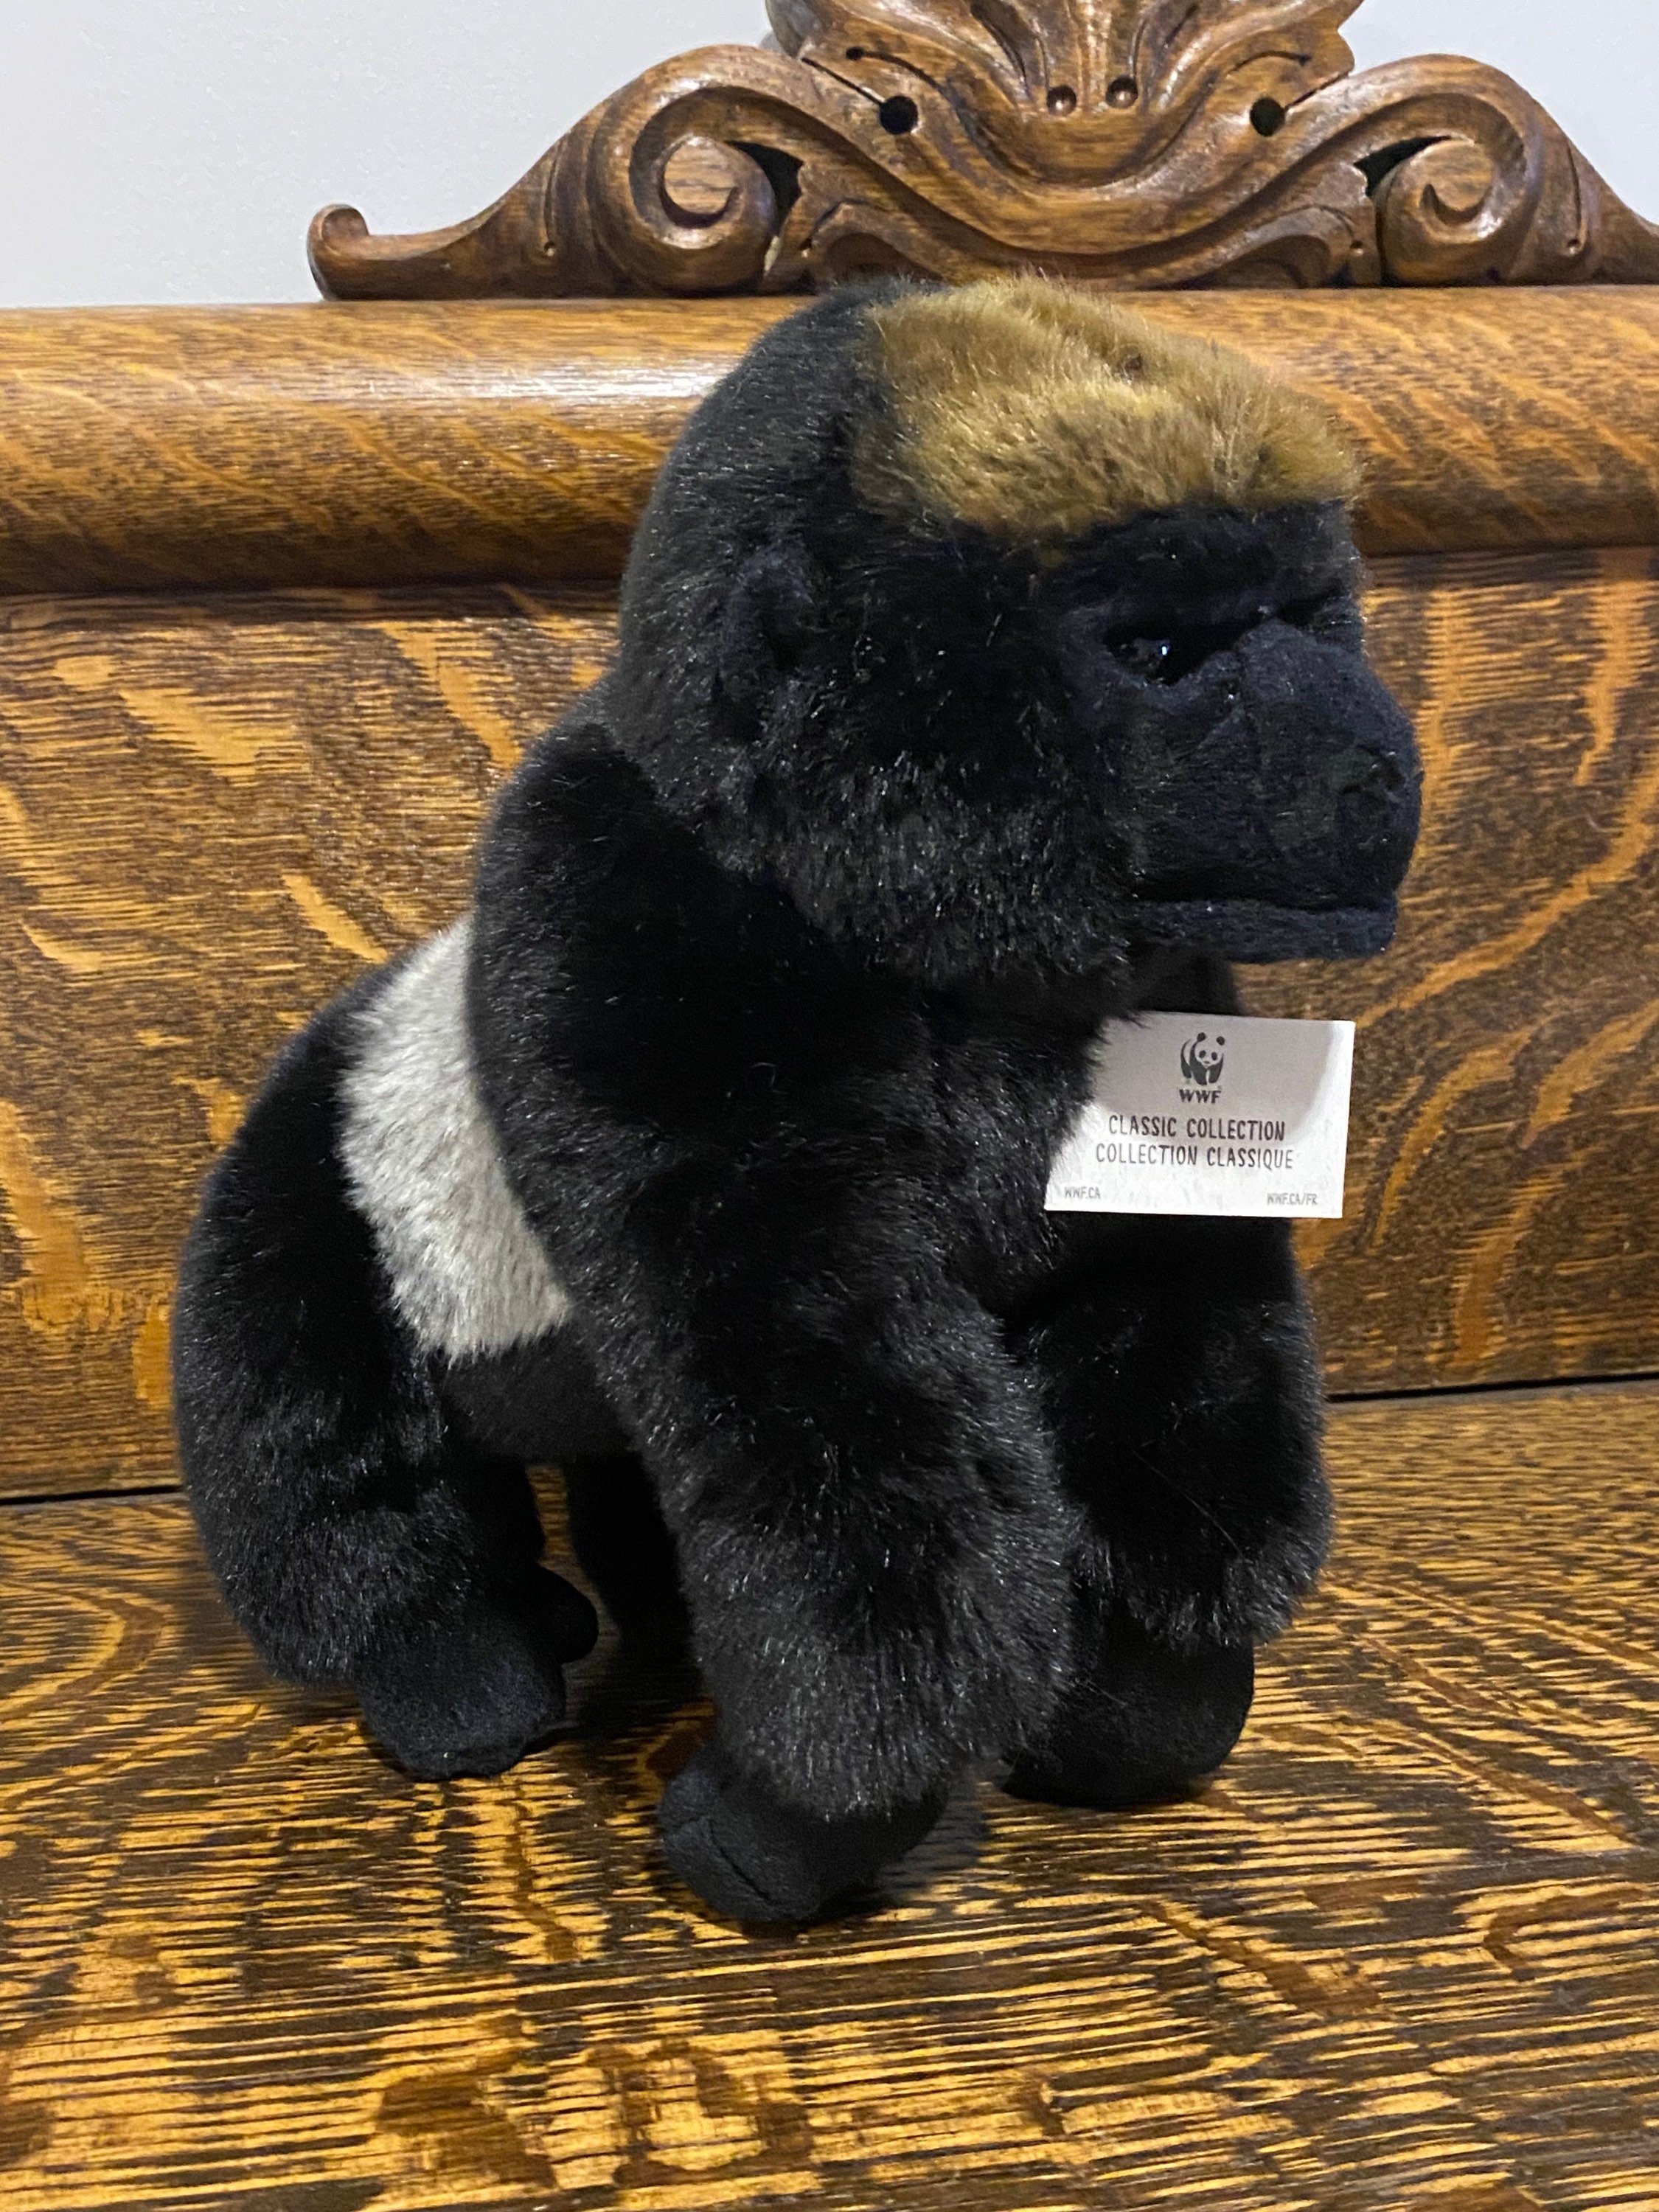  zkqeuak New Gorilla Tag Plush Stuffed Animal Plushie